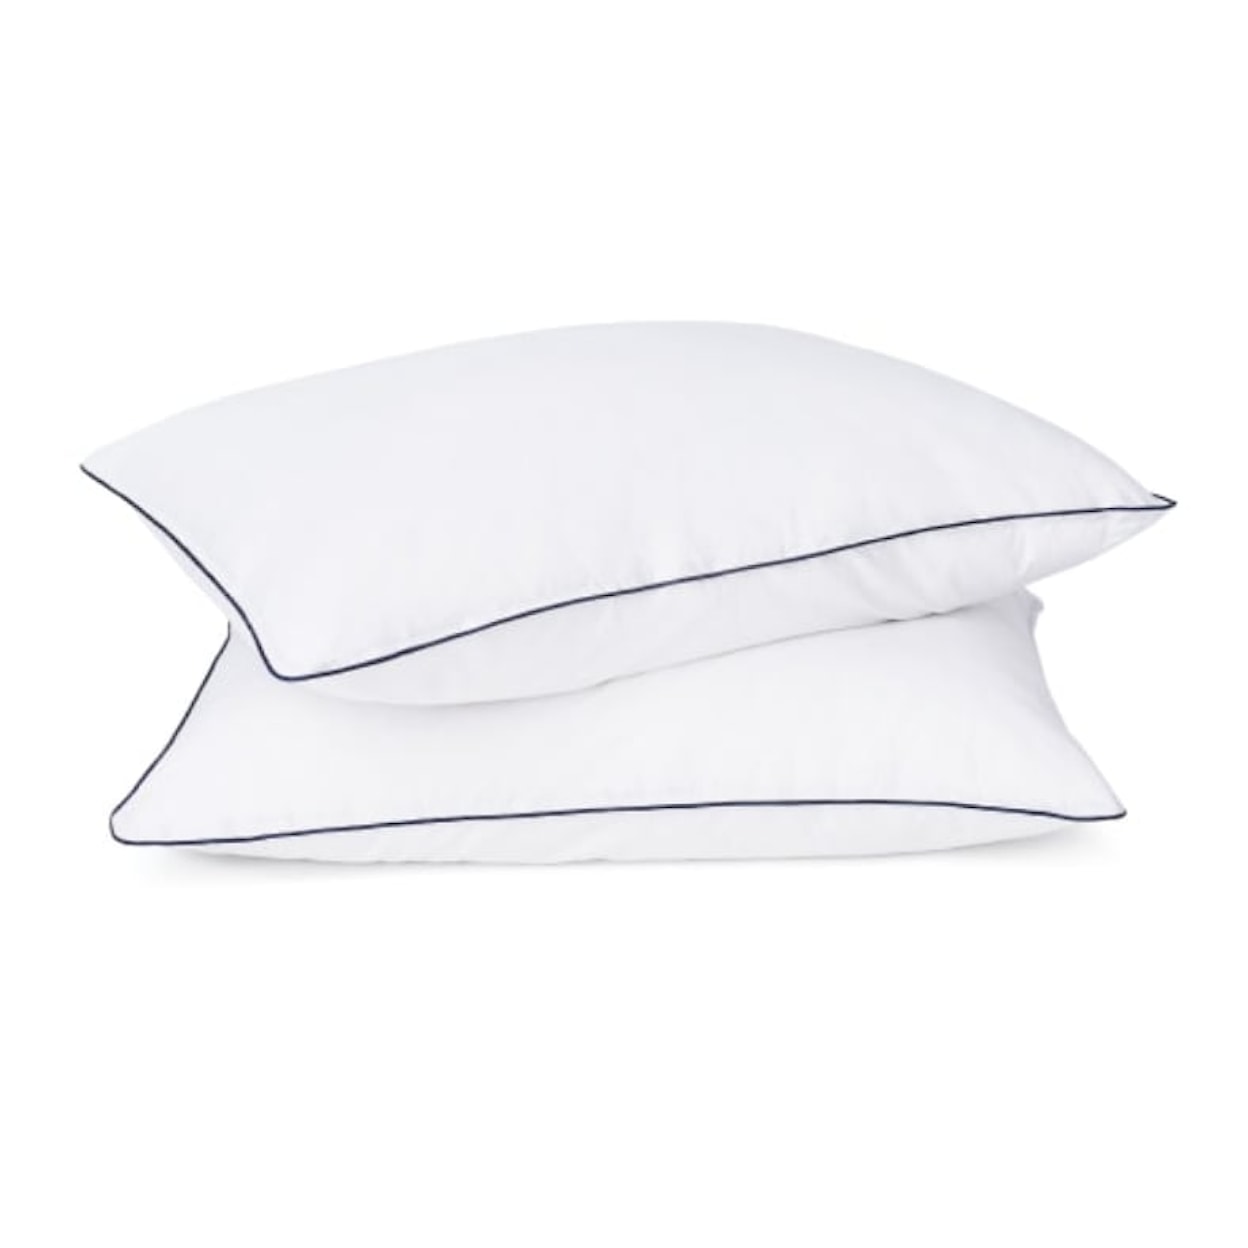 Helix Sunset Luxe Sunset Luxe Queen + FREE Pillows